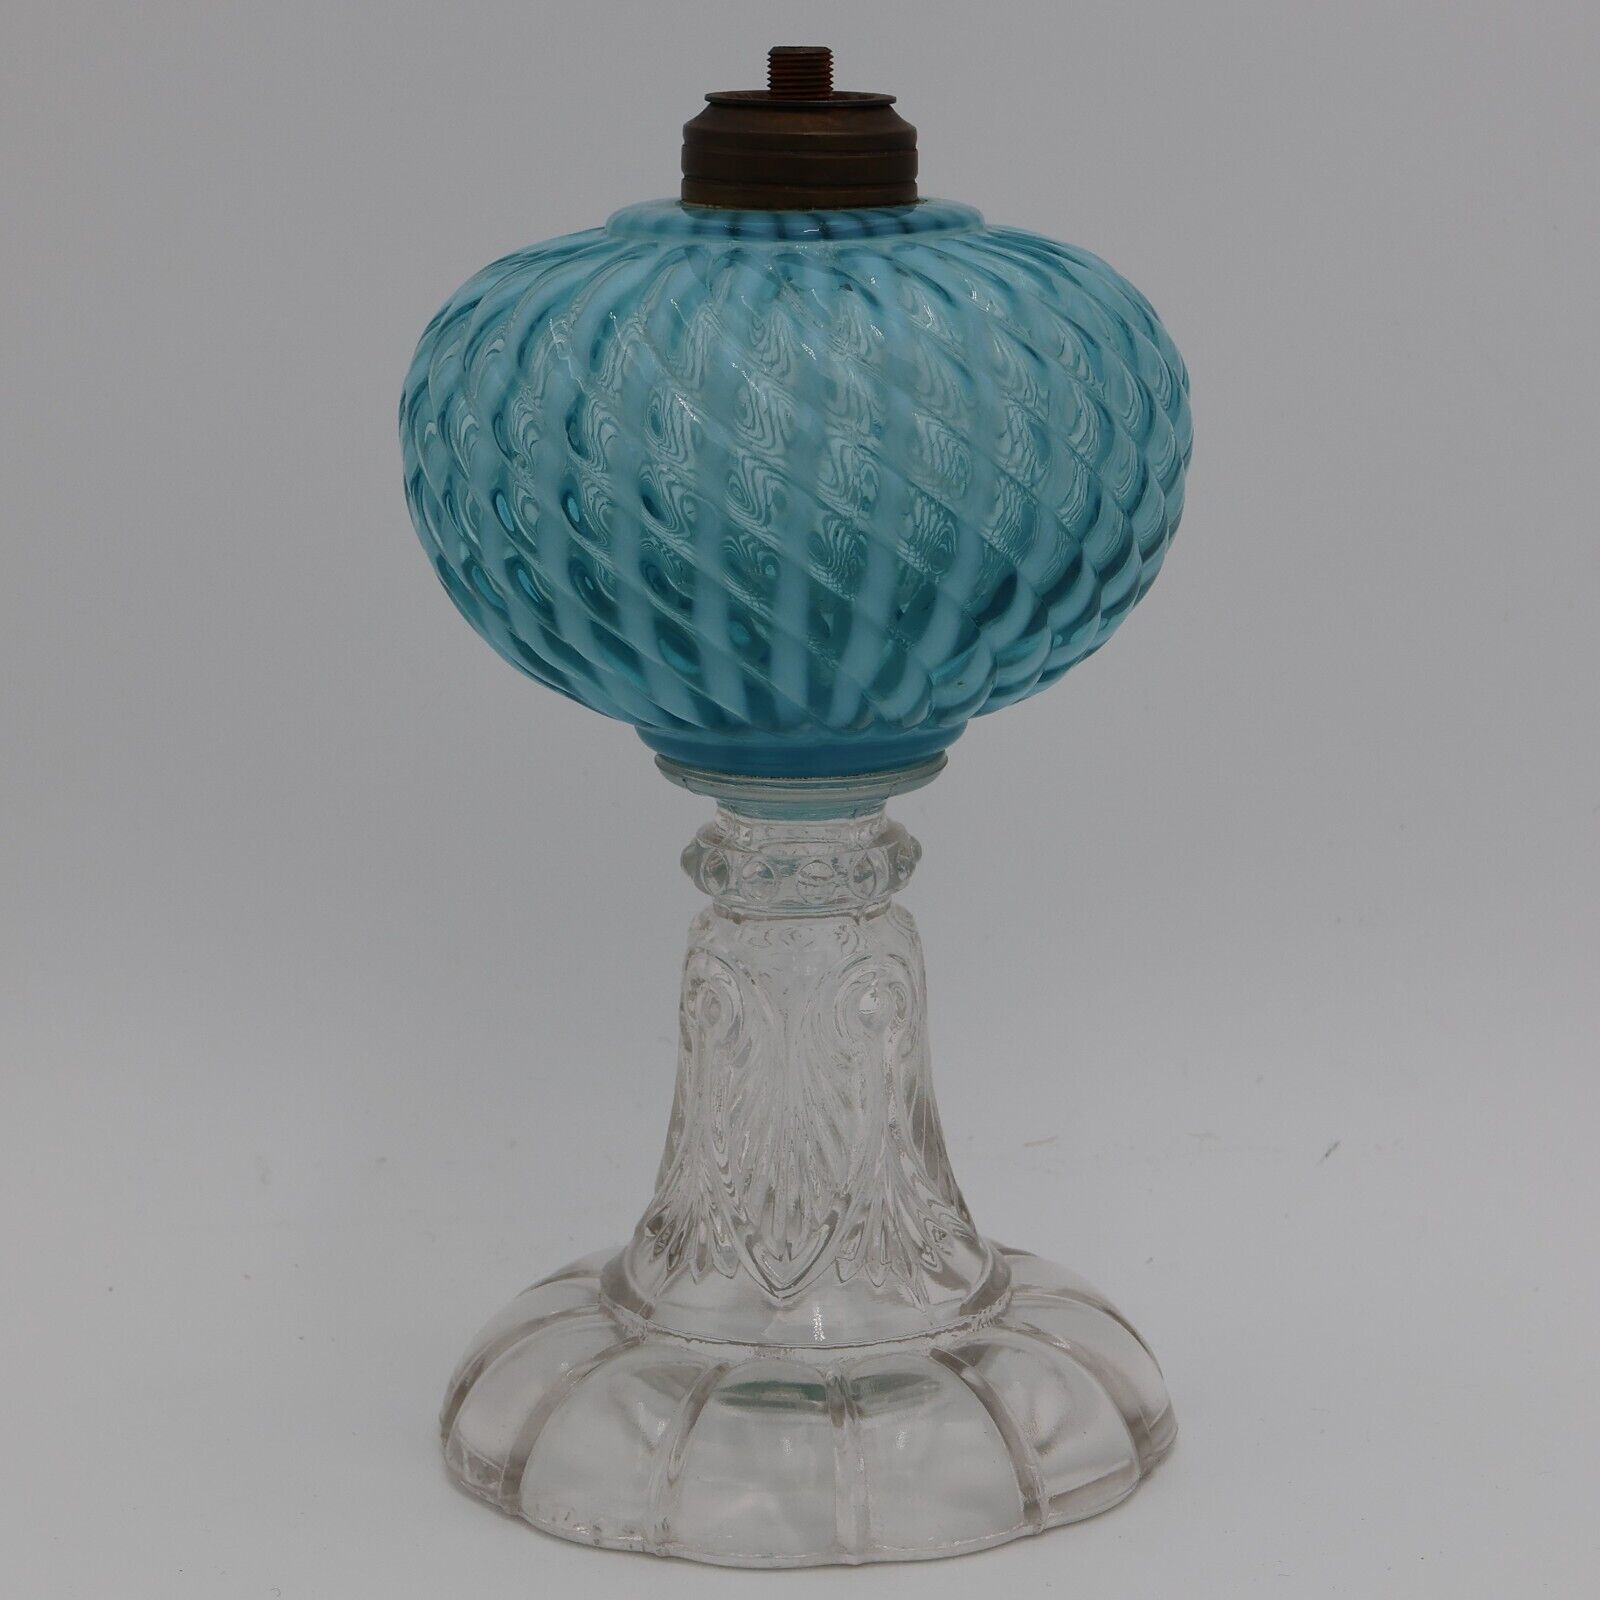 Hobbs Sheldon Swirl OIL LAMP Blue Opalescent Glass Antique Victorian c1880s